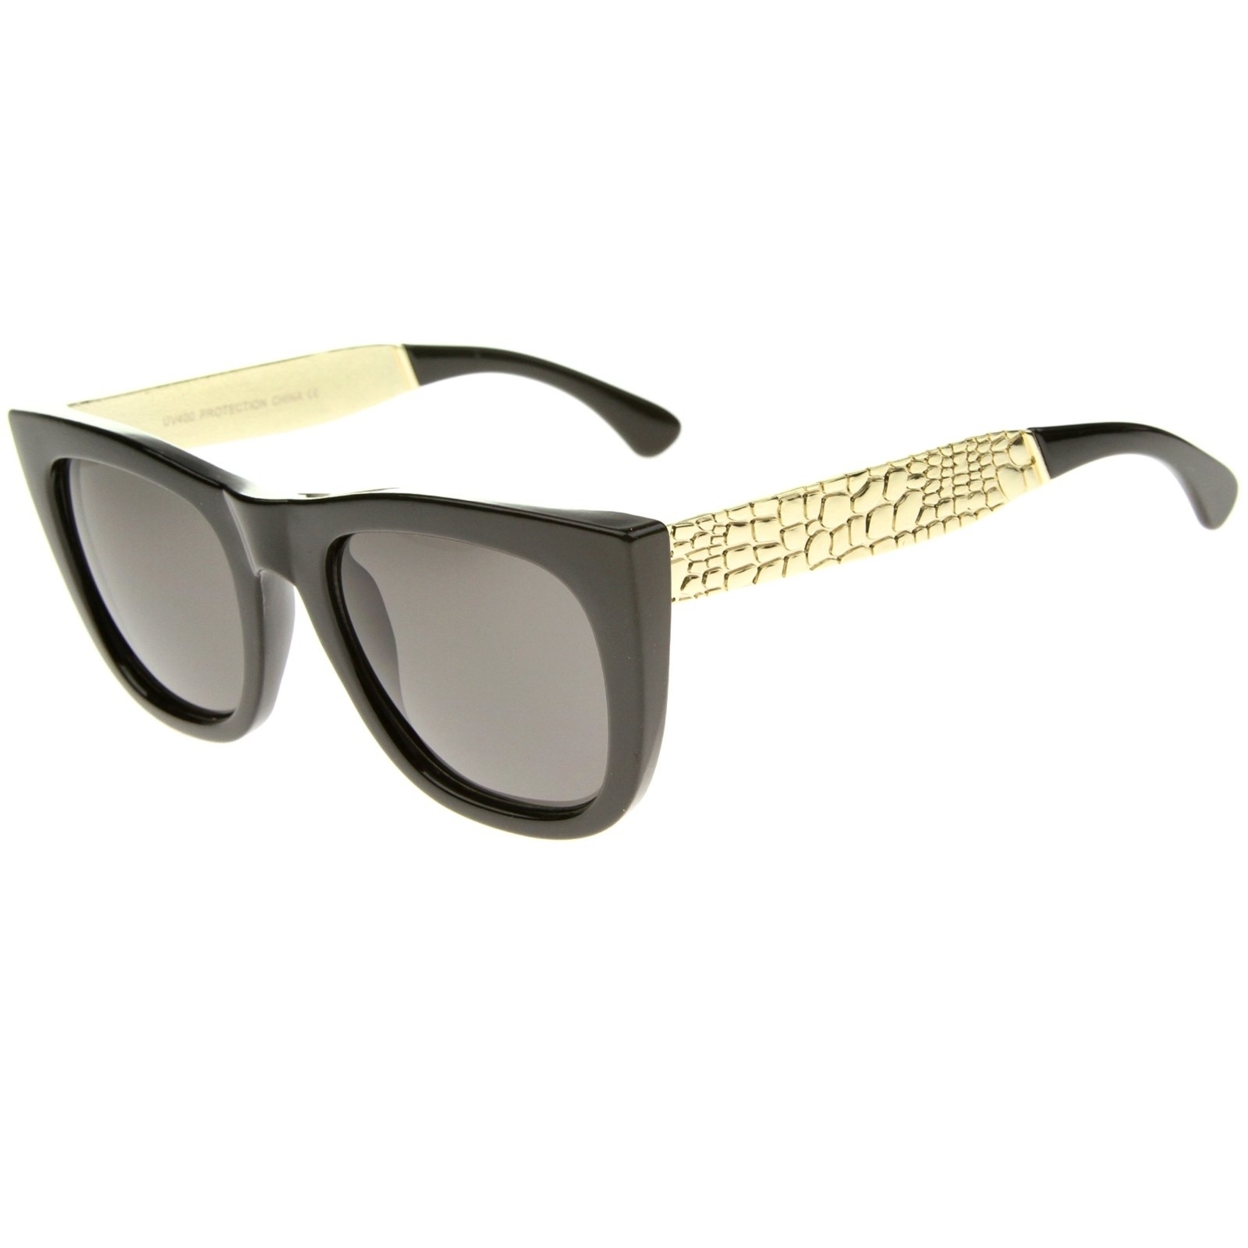 High Fashion Alligator Metal Temple Bold Rimmed Flat Top Sunglasses - Black-Gunmetal / Smoke